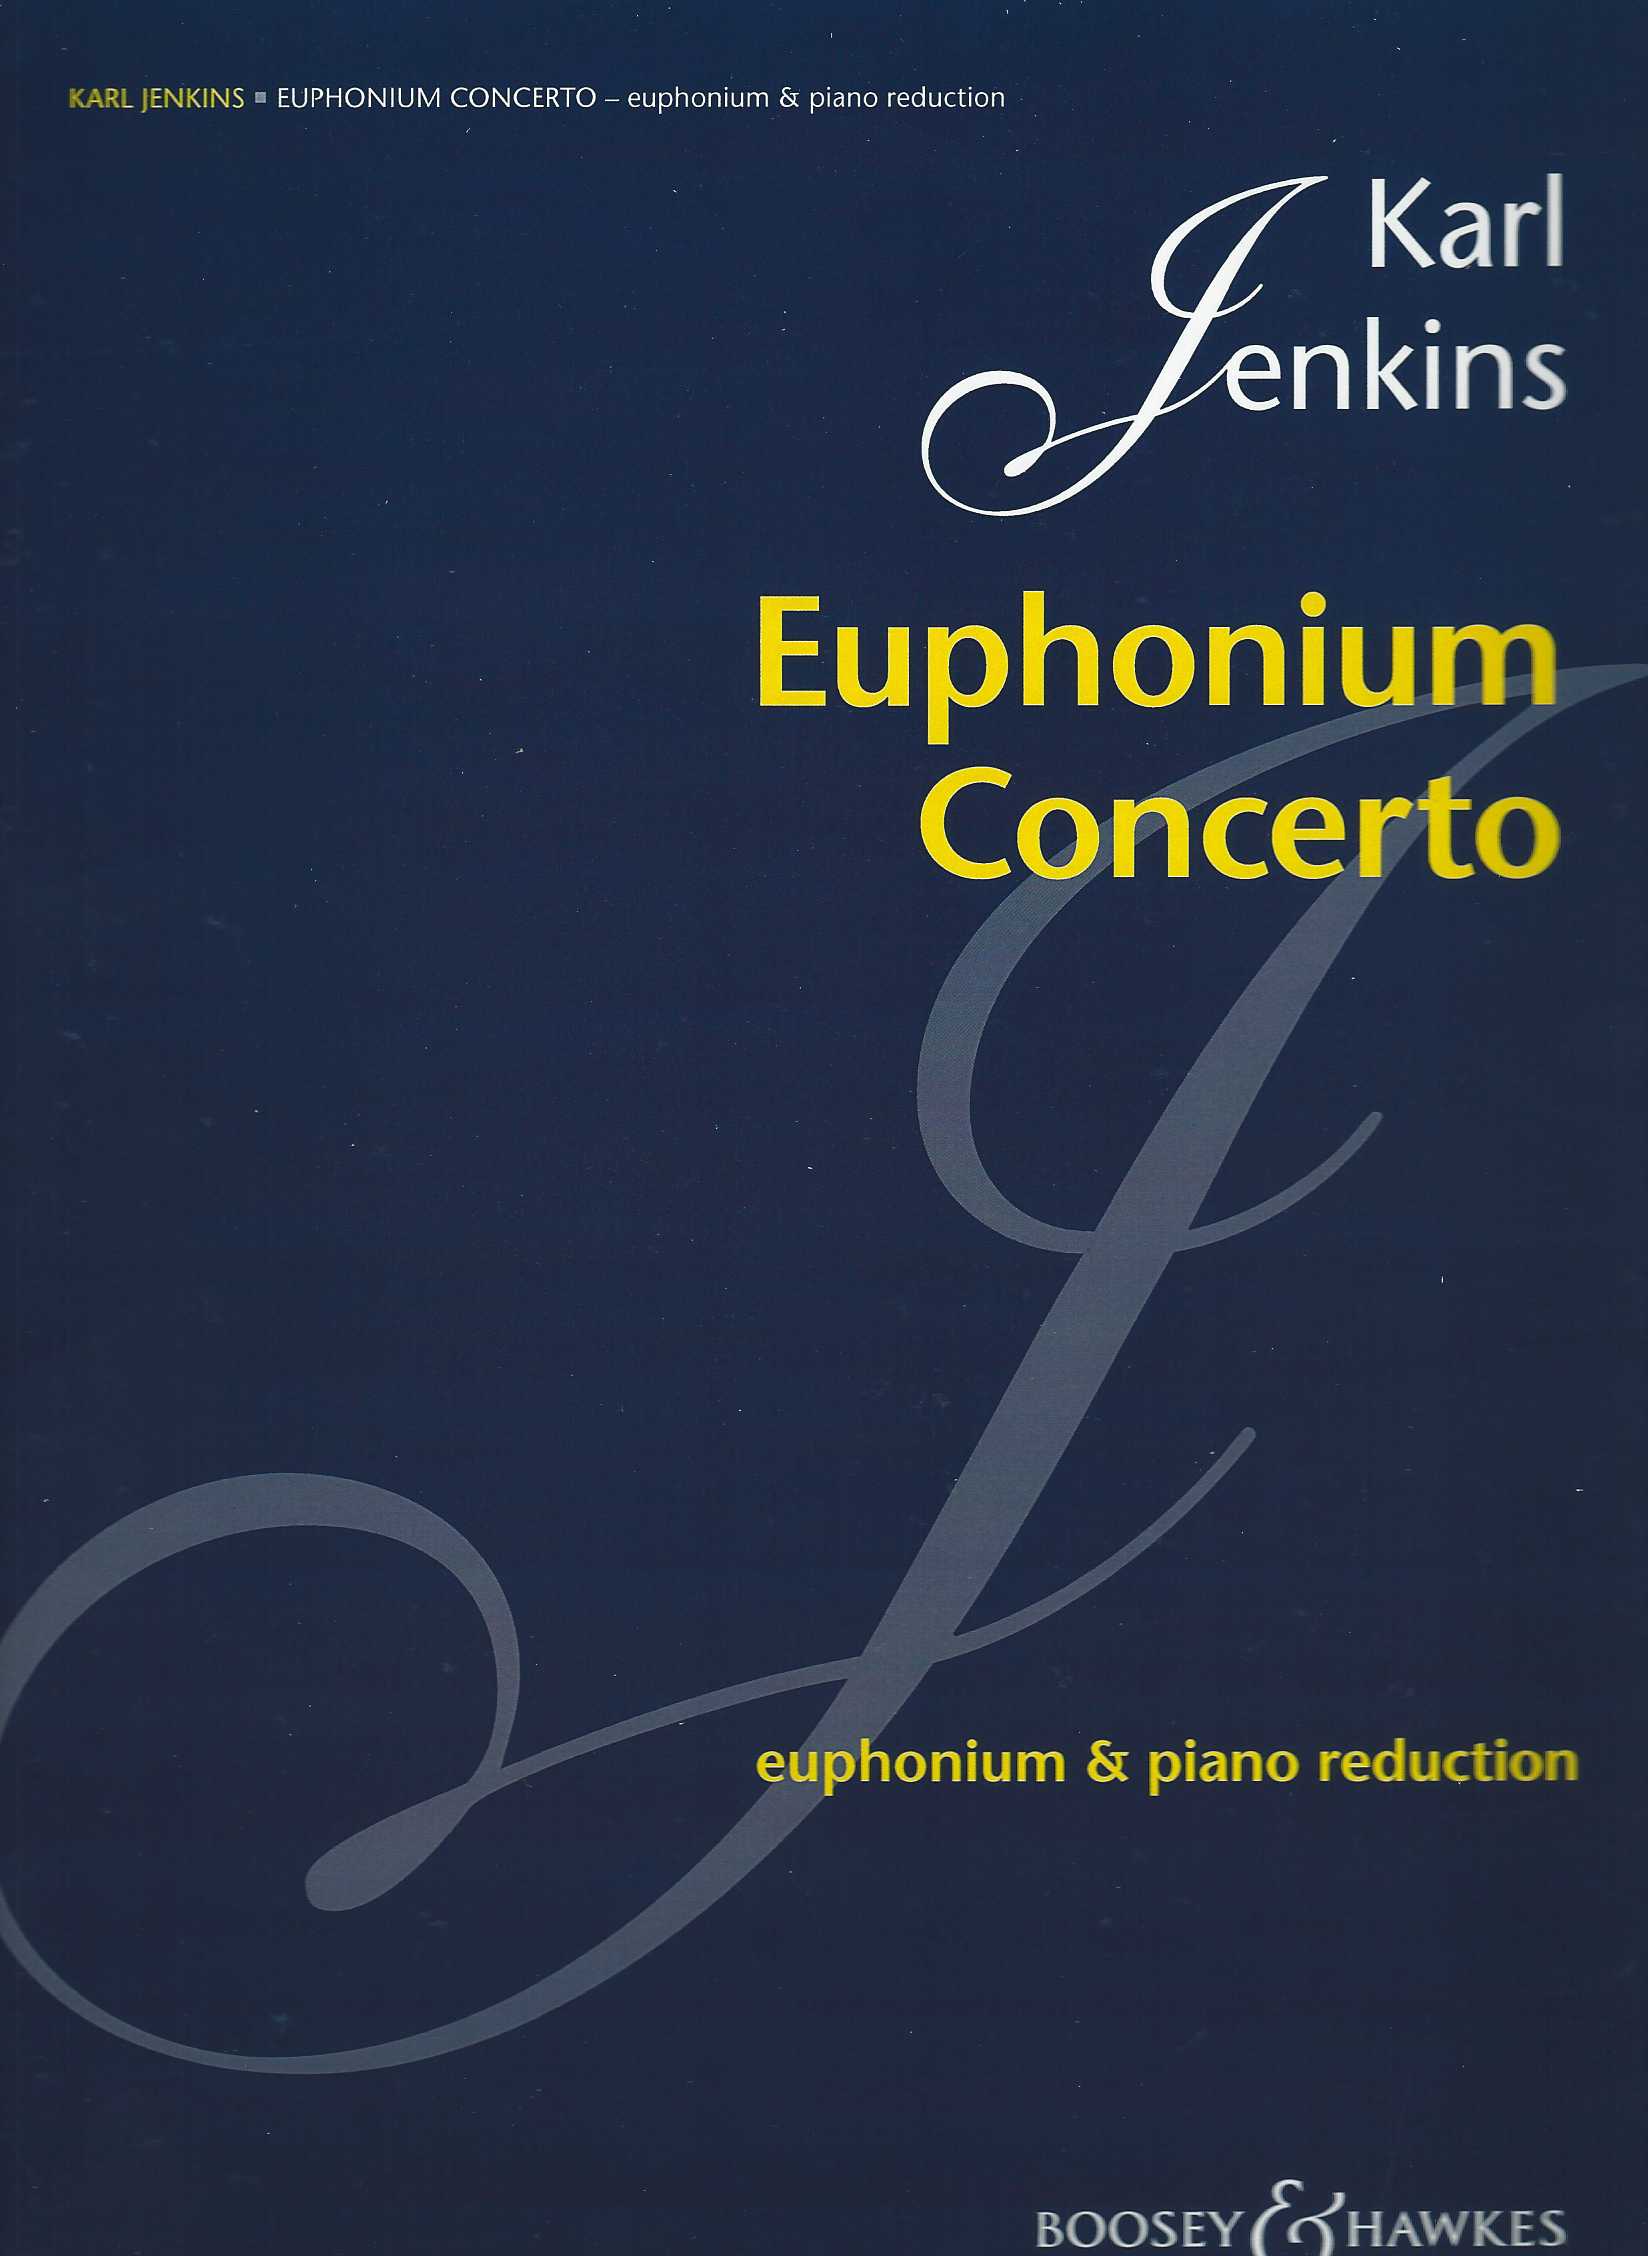 Euphonium Concerto - Karl Jenkins - Euphonium and Piano version